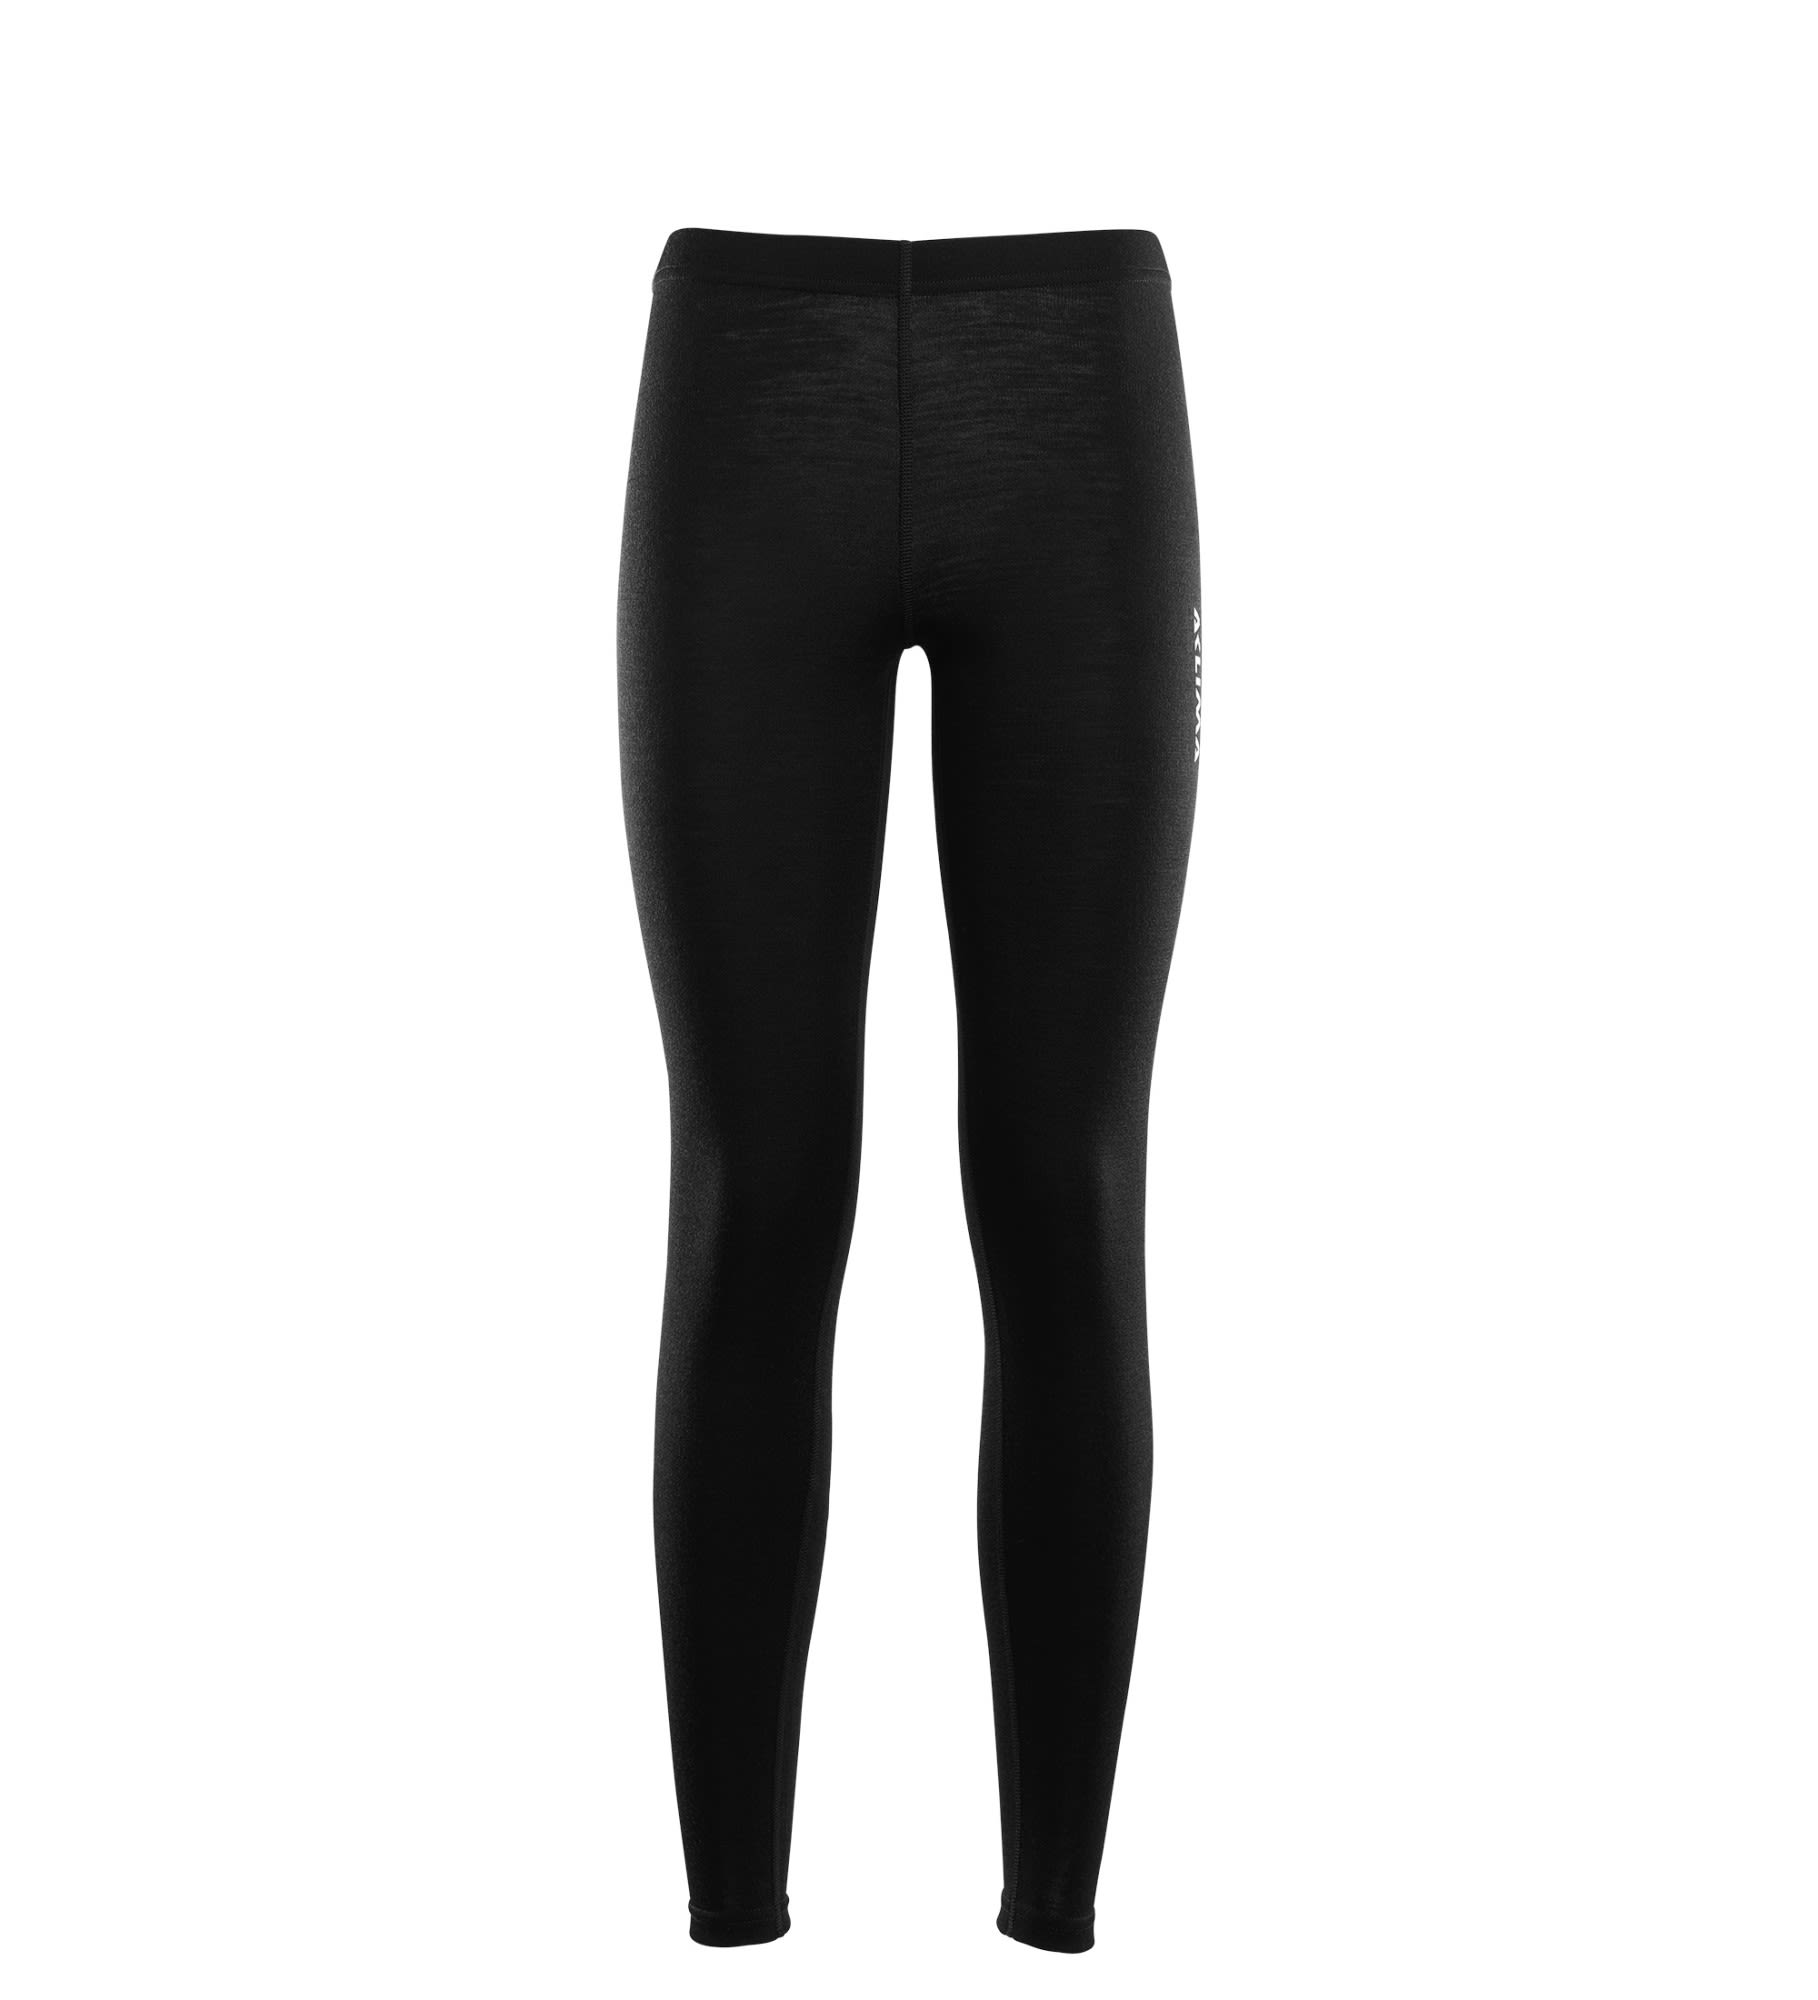 Aclima Warmwool Long Pant Schwarz- Female Merino Leggings und Tights- Grsse XS - Farbe Jet Black